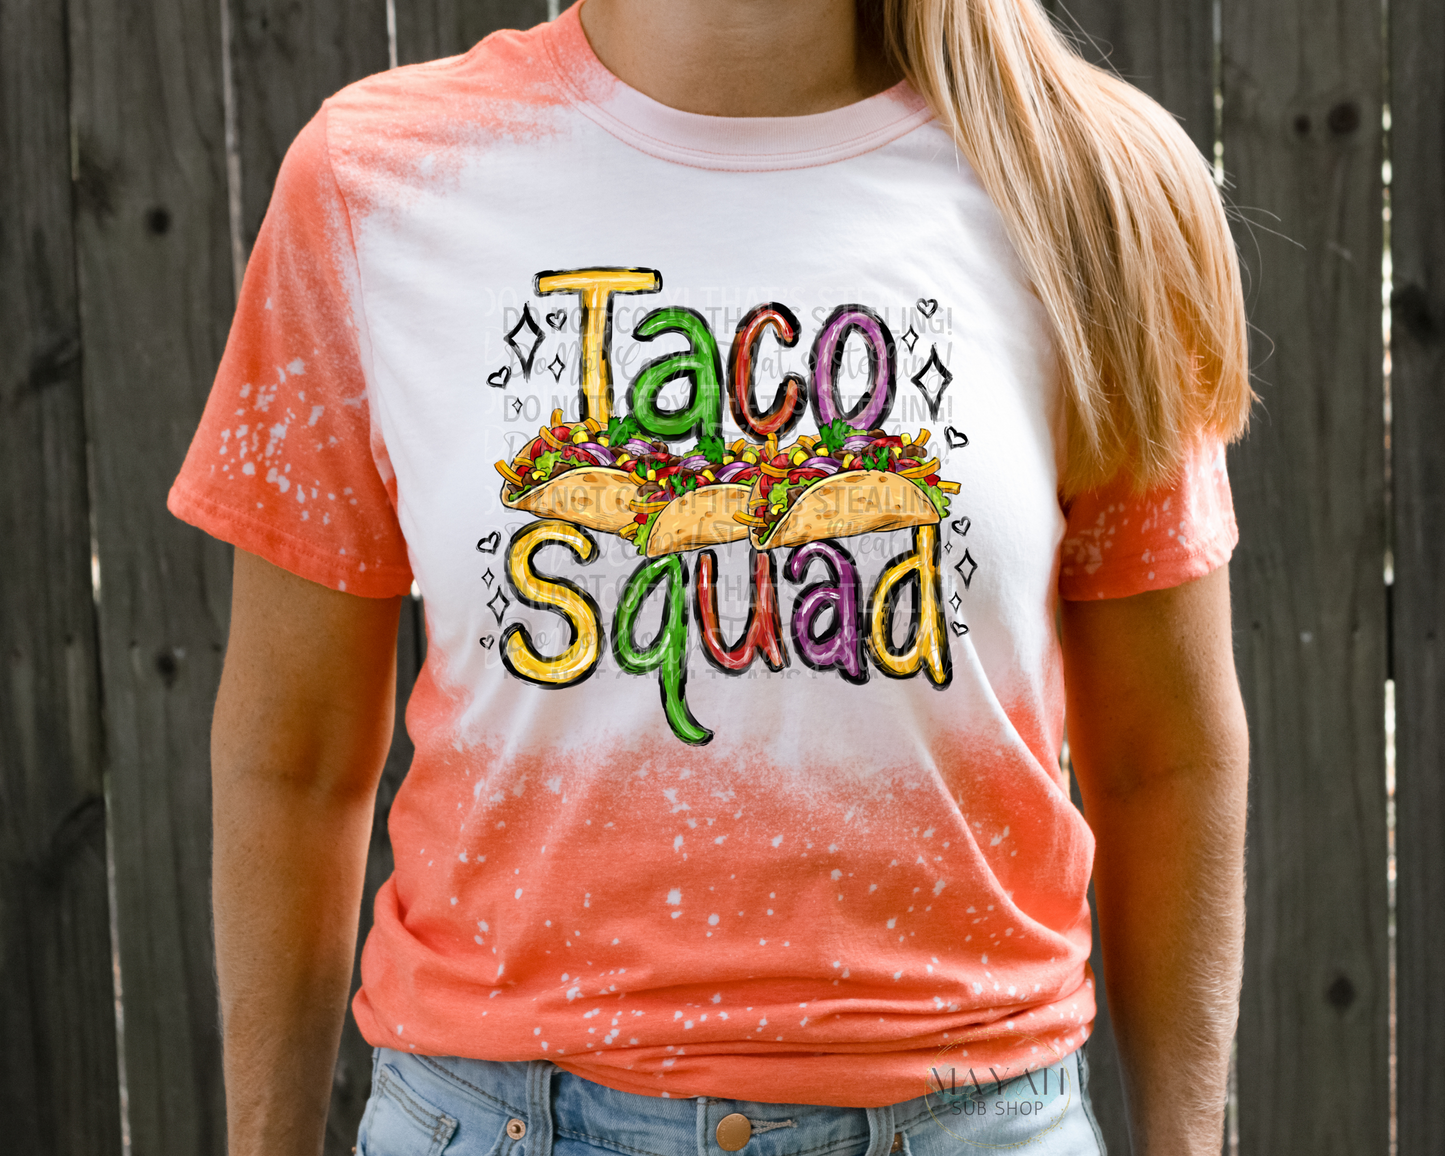 Taco Squad Bleached Tee - Mayan Sub Shop